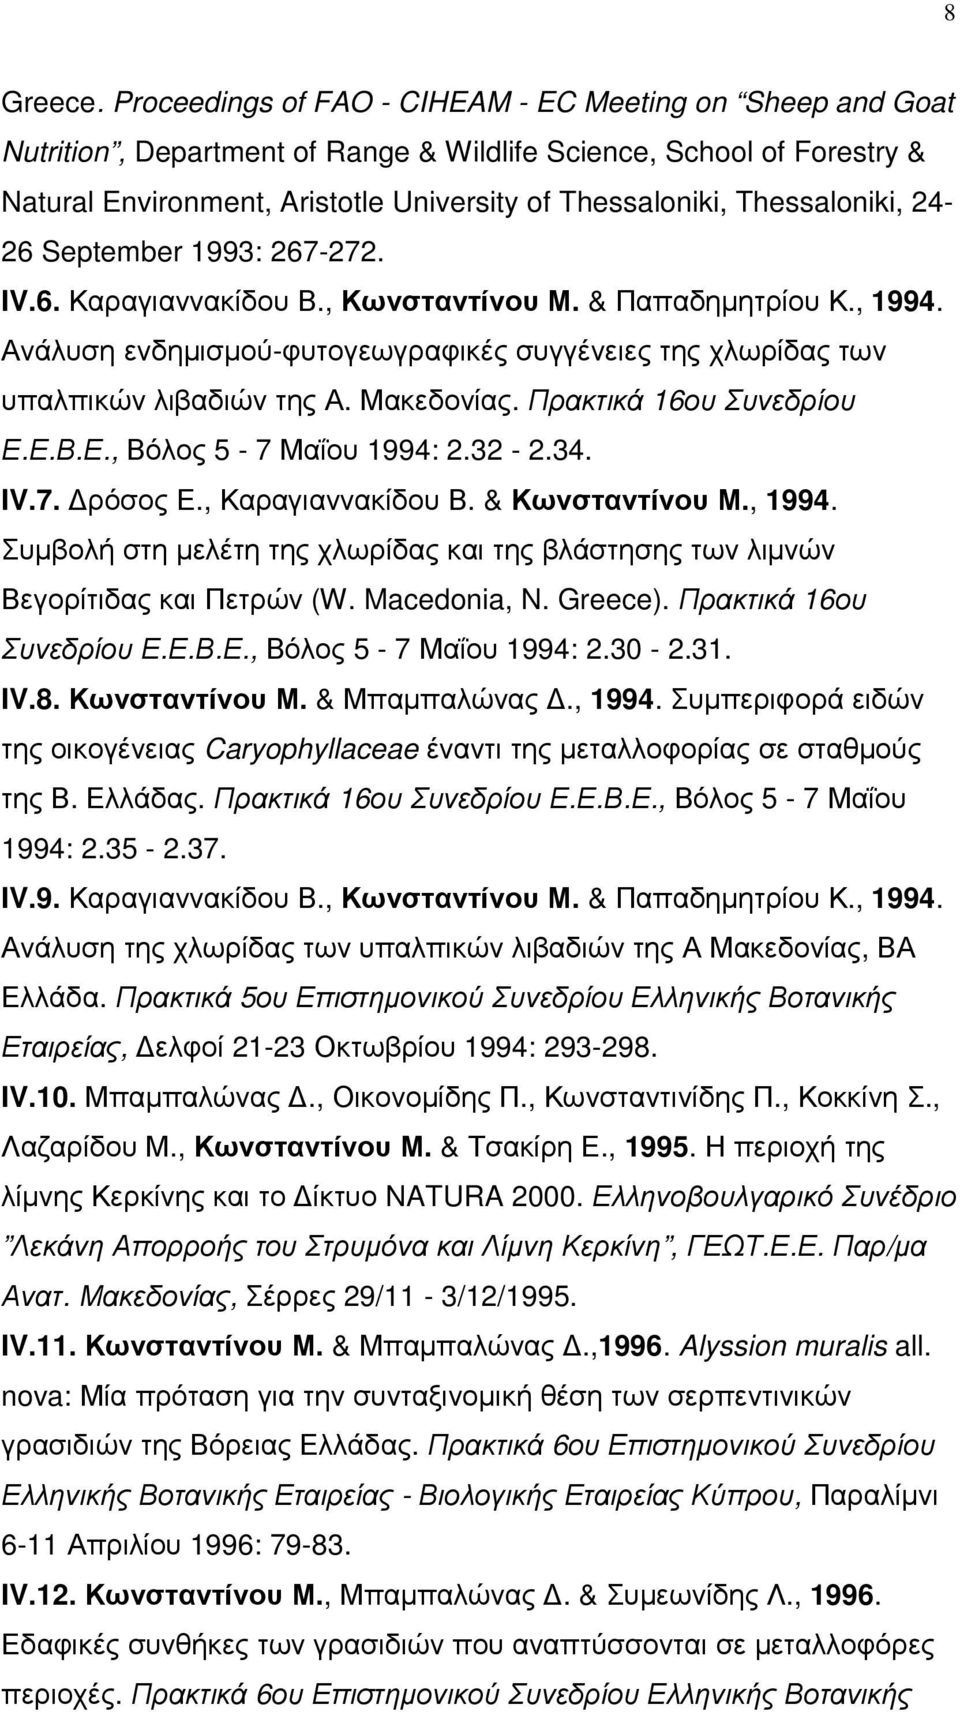 Thessaloniki, 24-26 September 1993: 267-272. IV.6. Καραγιαννακίδου Β., Κωνσταντίνου Μ. & Παπαδηµητρίου Κ., 1994.